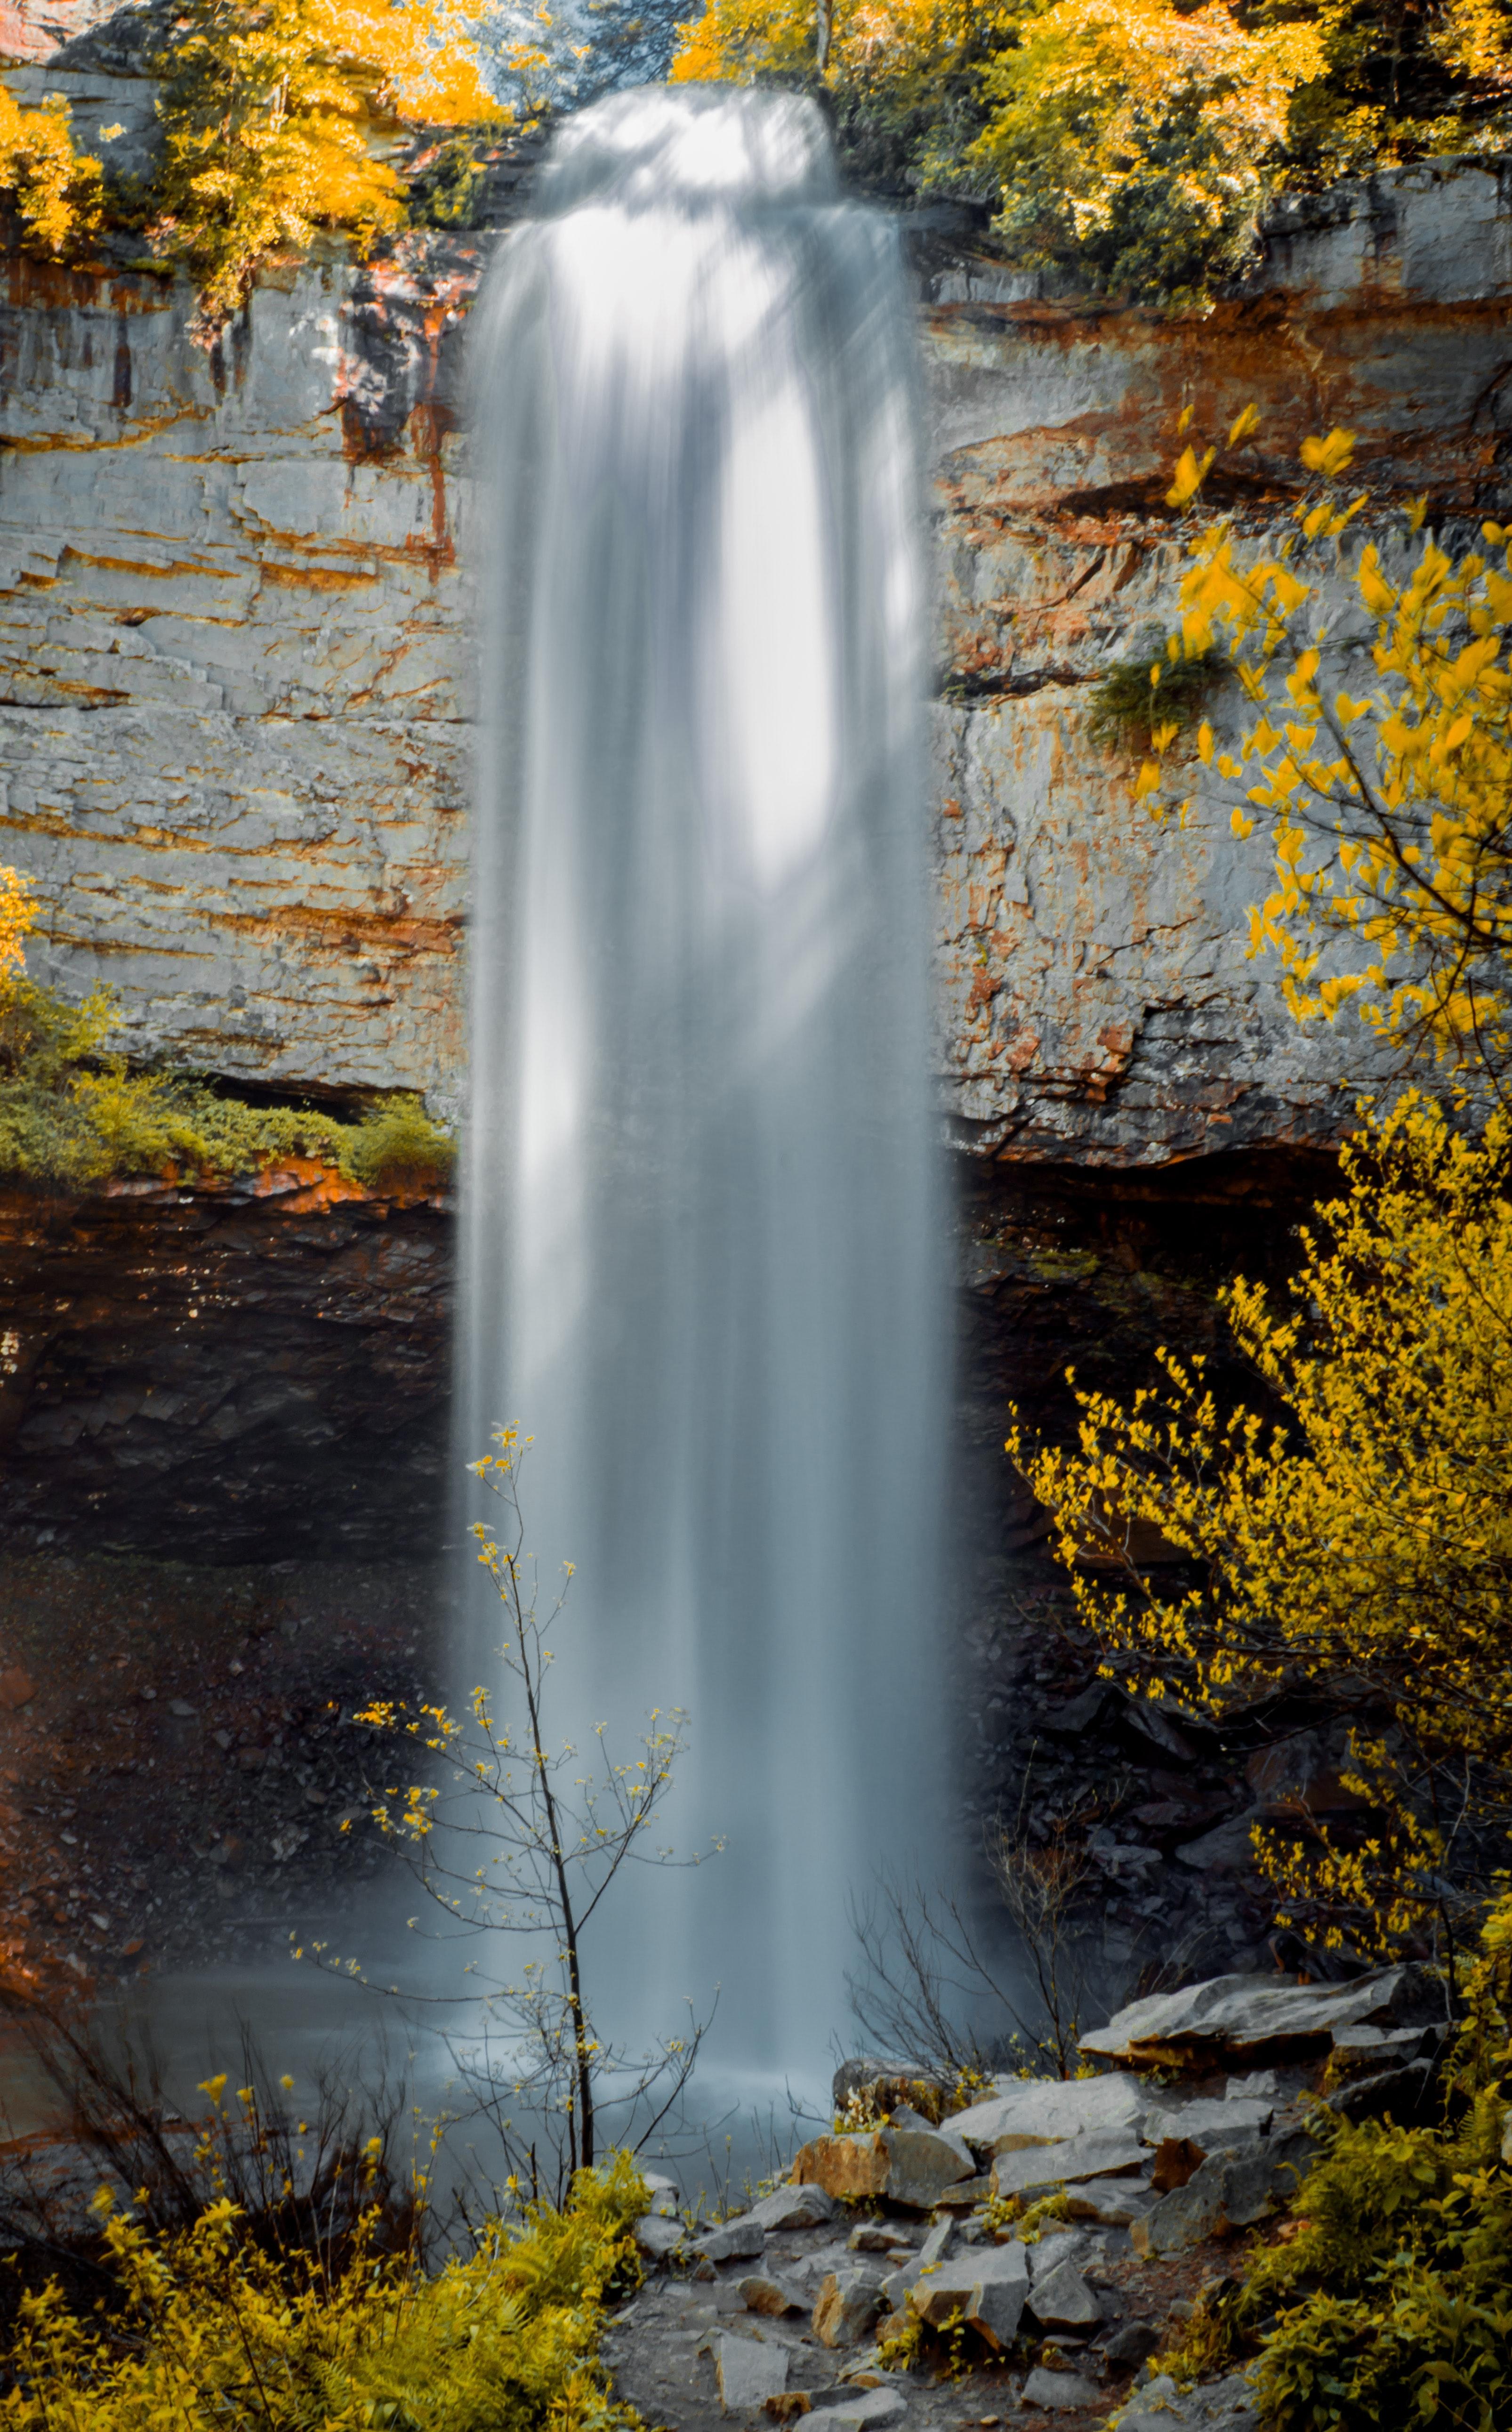 The Fall Creek Falls waterfall in Tennessee.